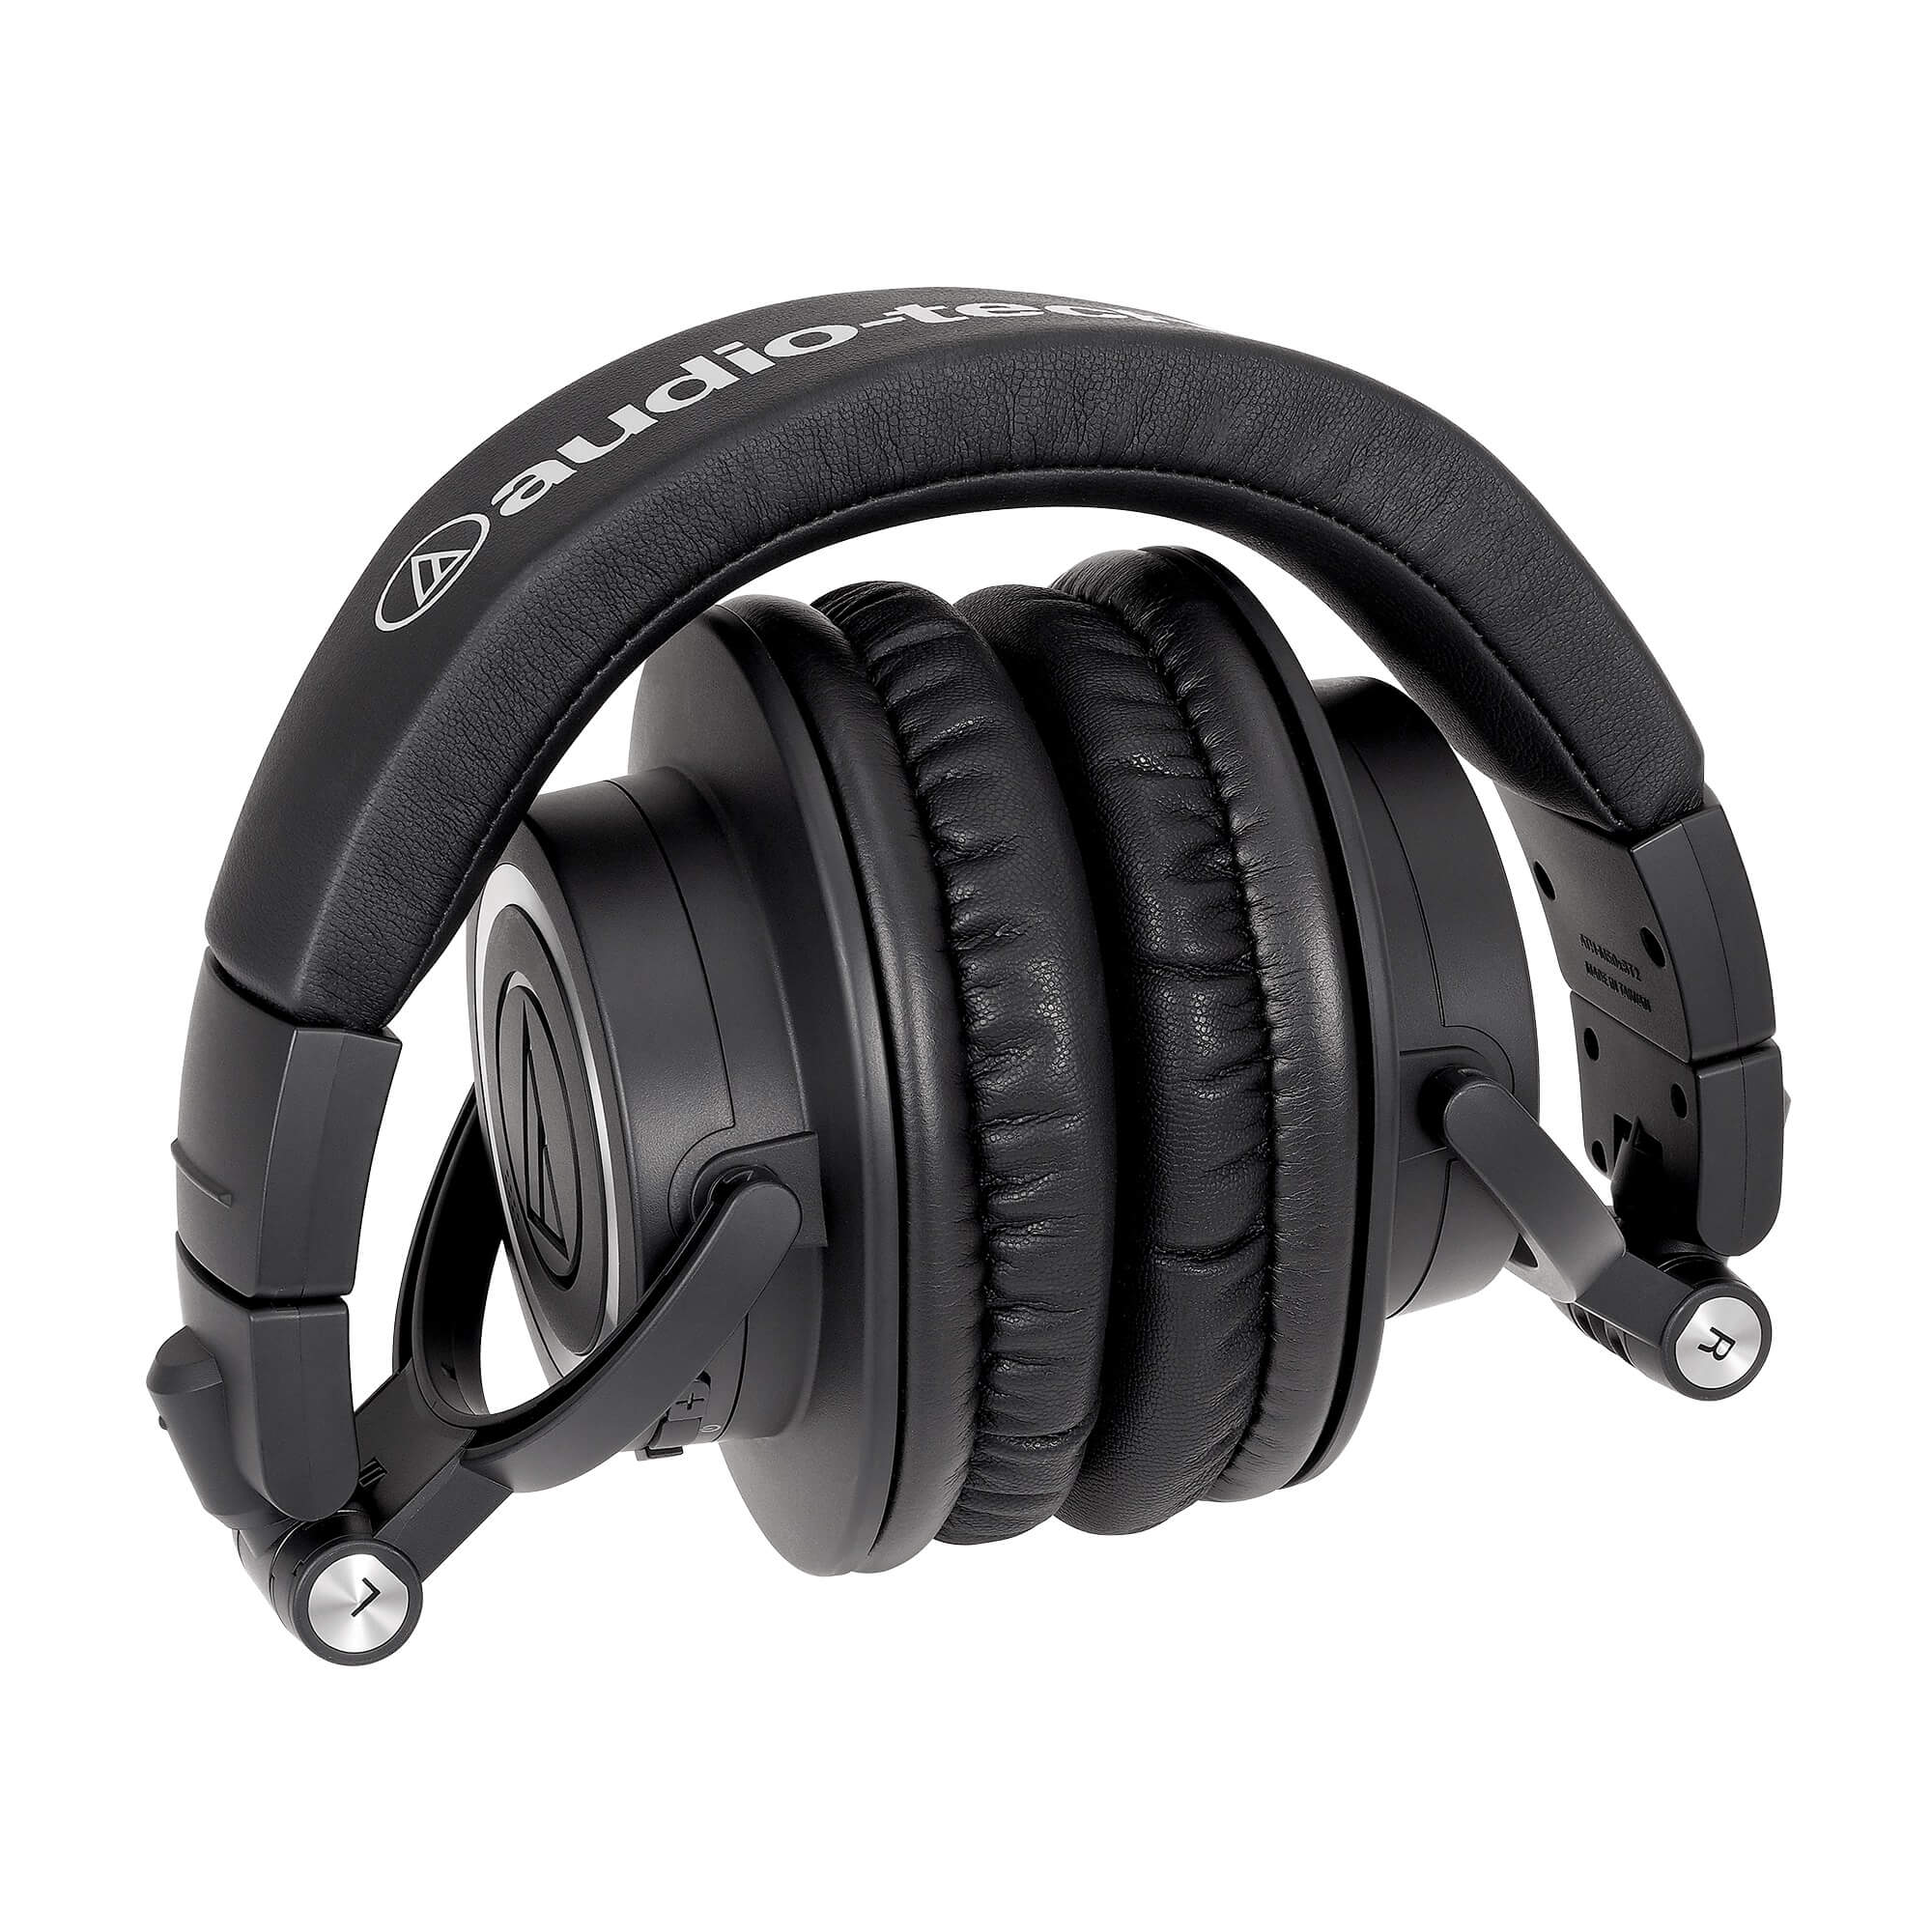 Audio-Technica ATH-M50xBT2 Bluetooth Wireless Over-Ear Headphones, folded